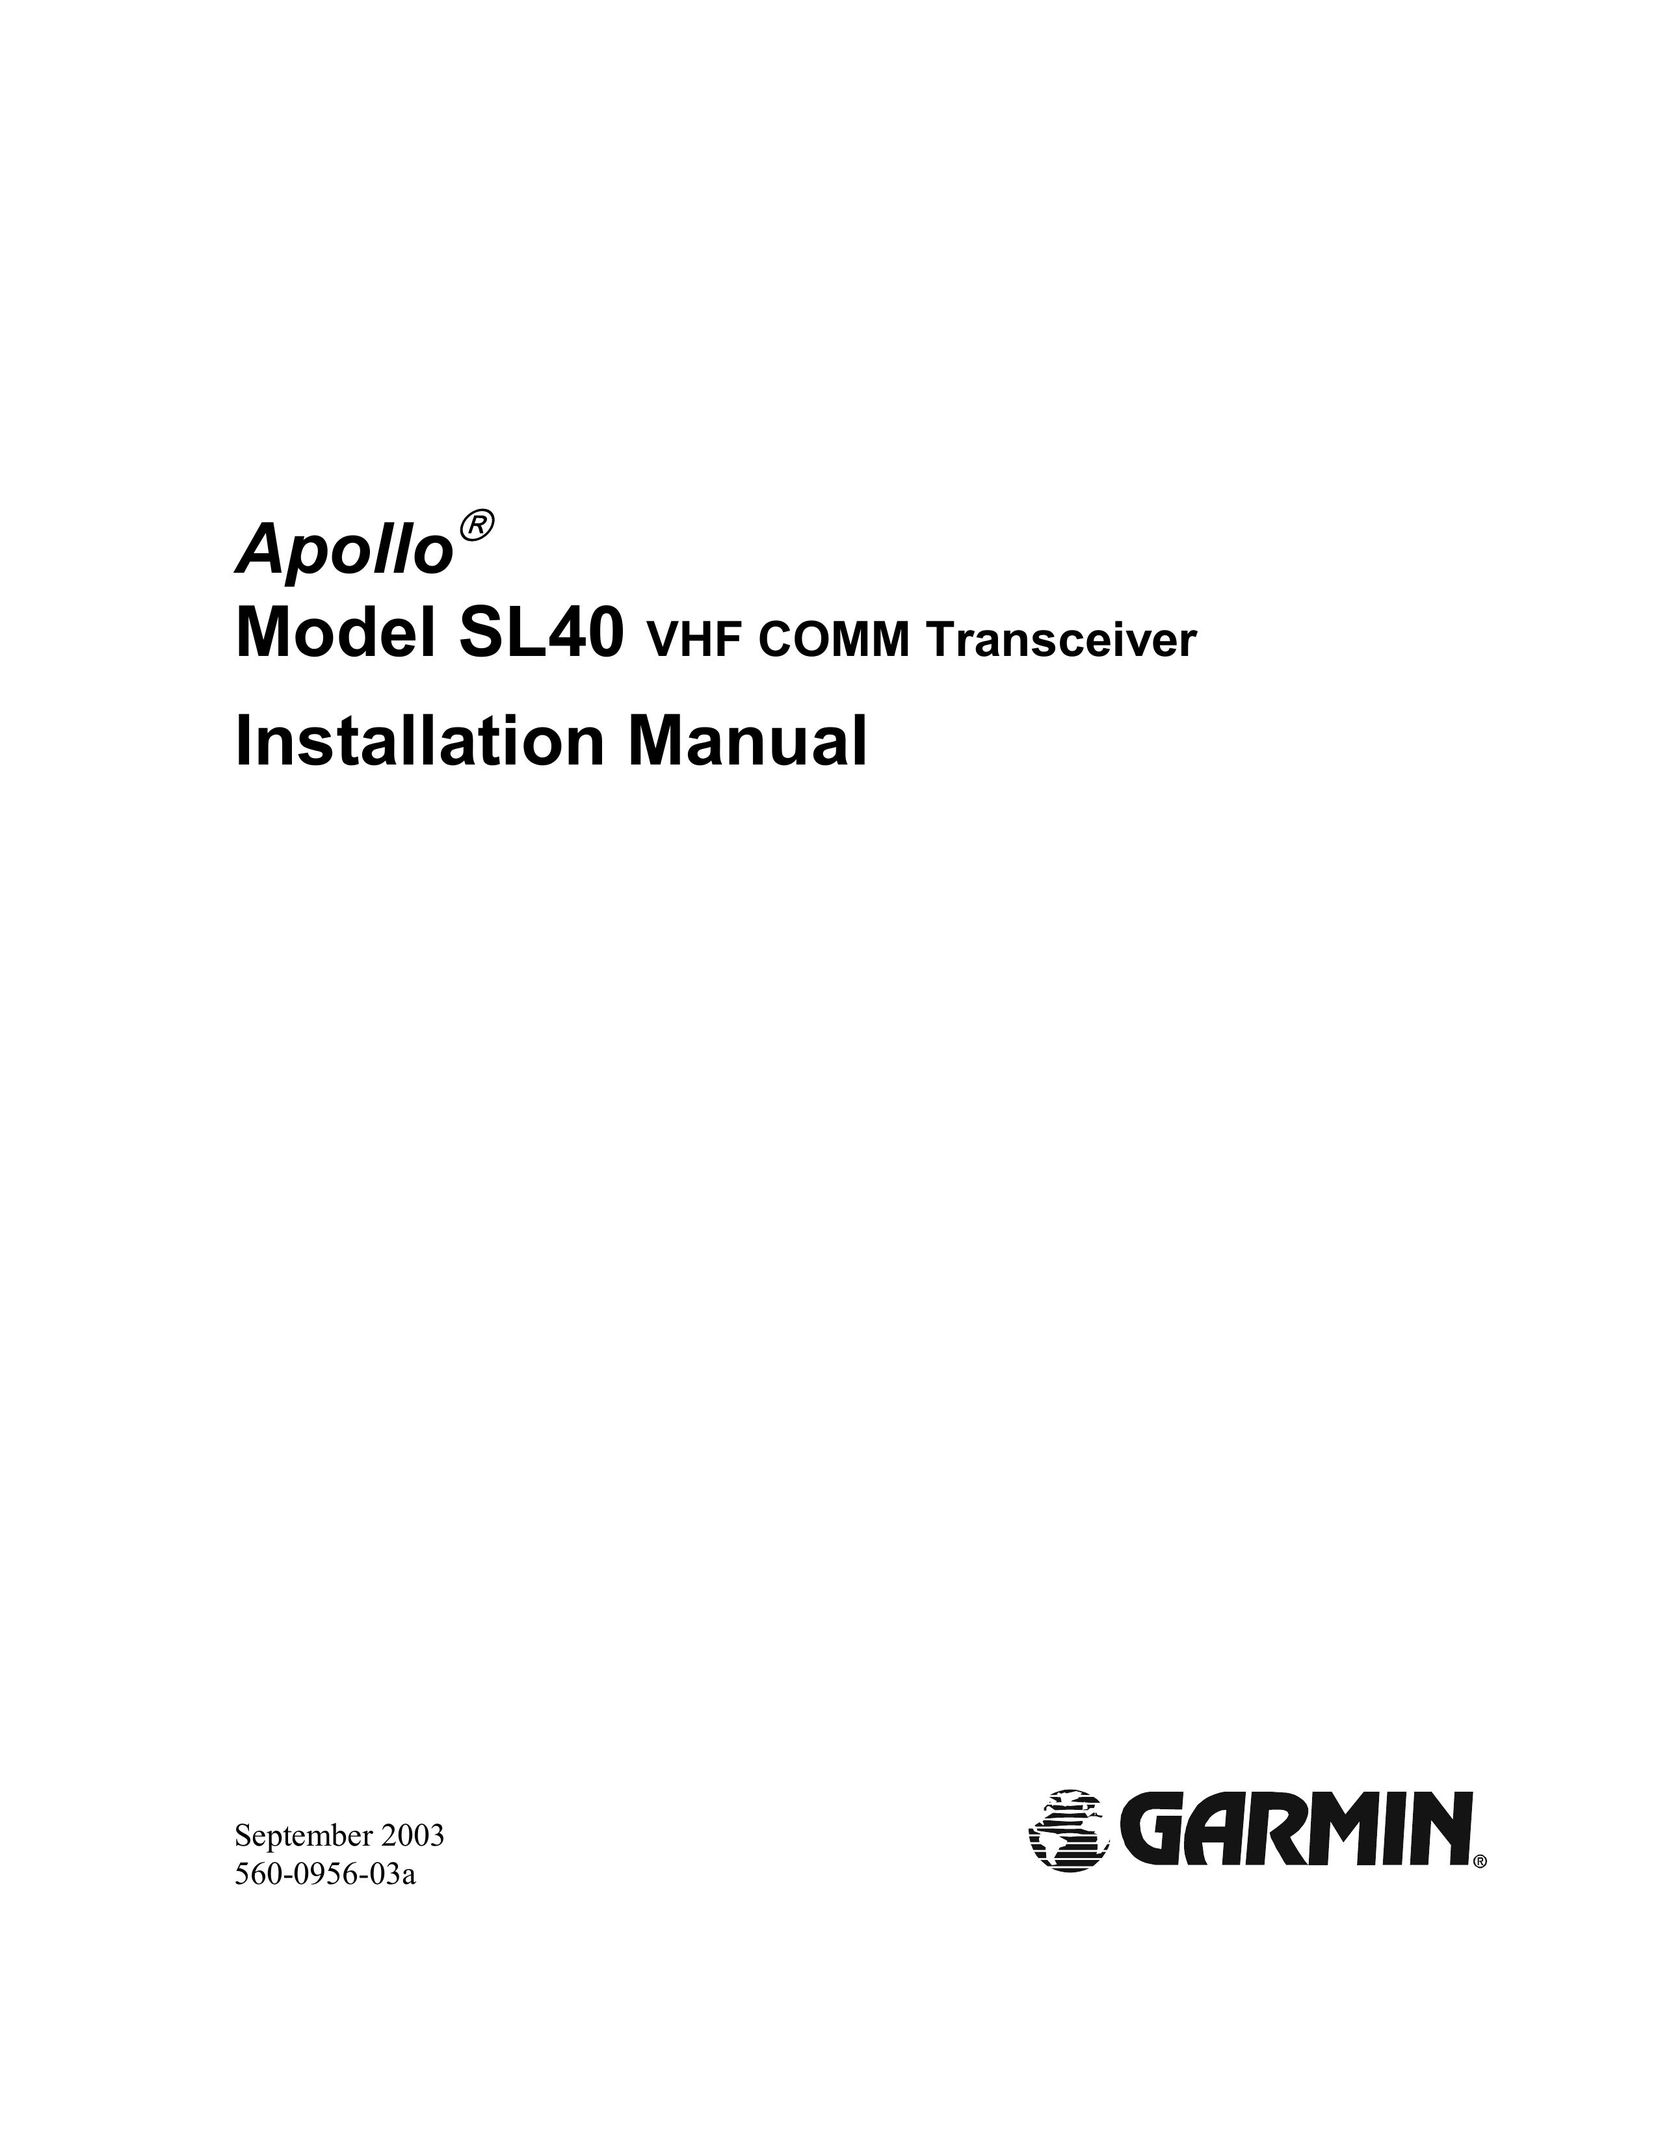 Garmin SL40 Network Card User Manual